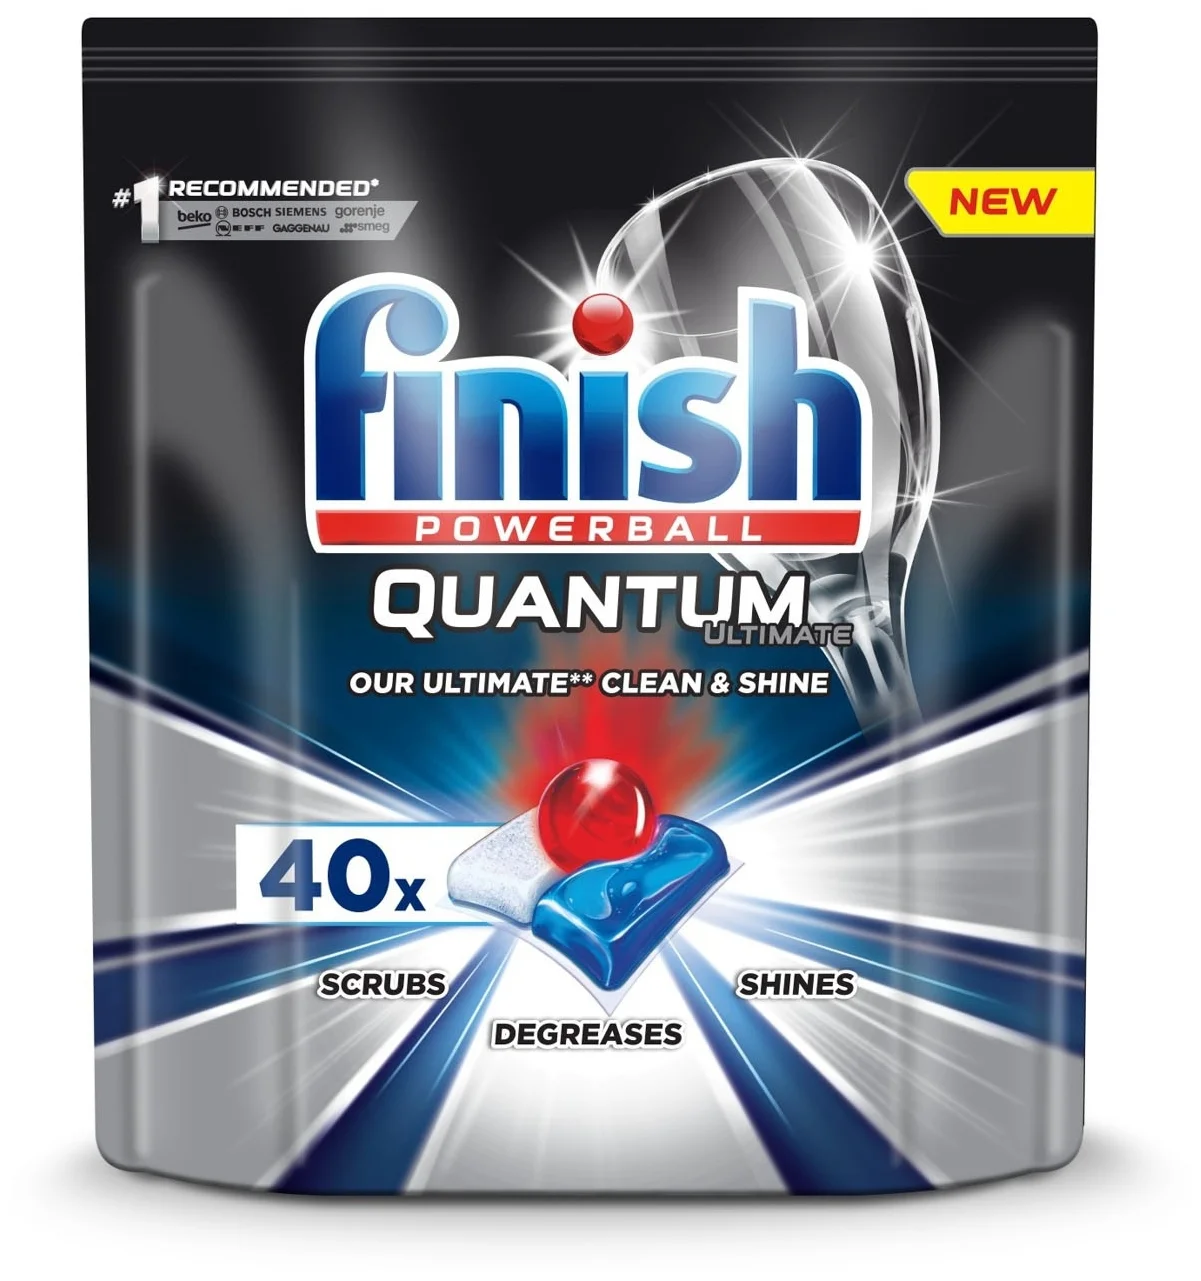 Finish Quantum Ultimate (original) дойпак - особенности: растворимая оболочка